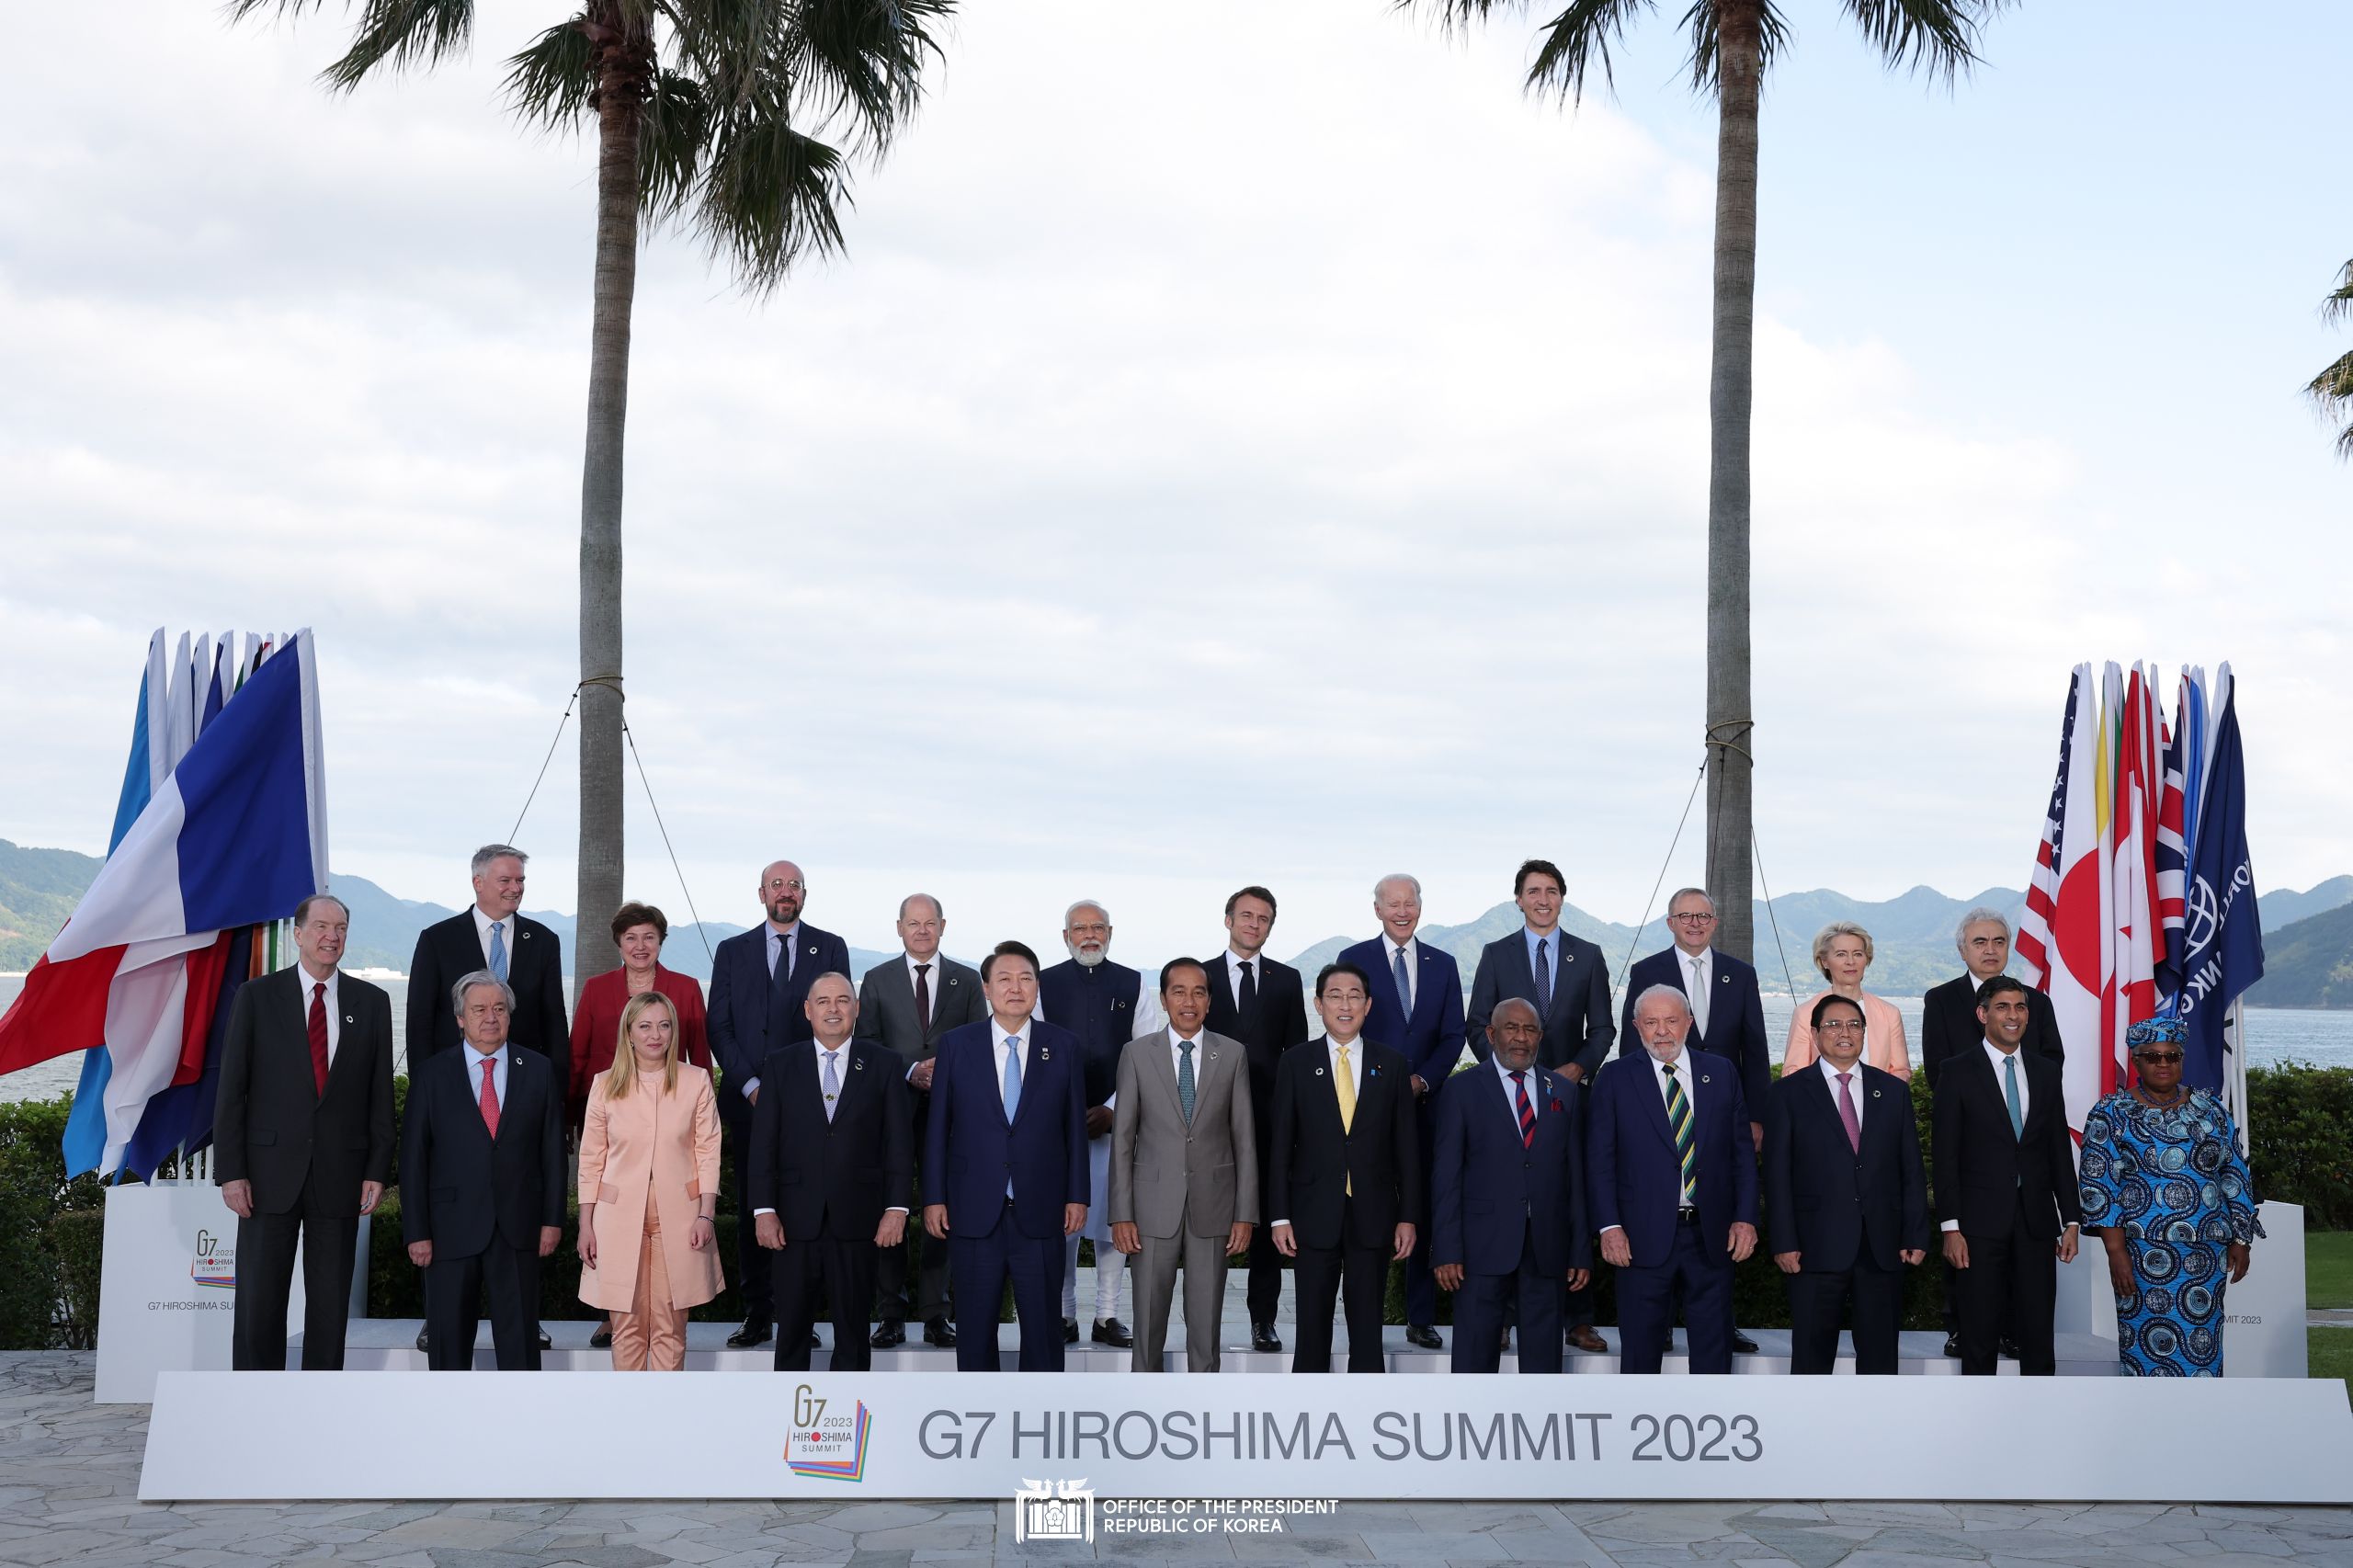 G7 Summit photo session in Hiroshima, Japan